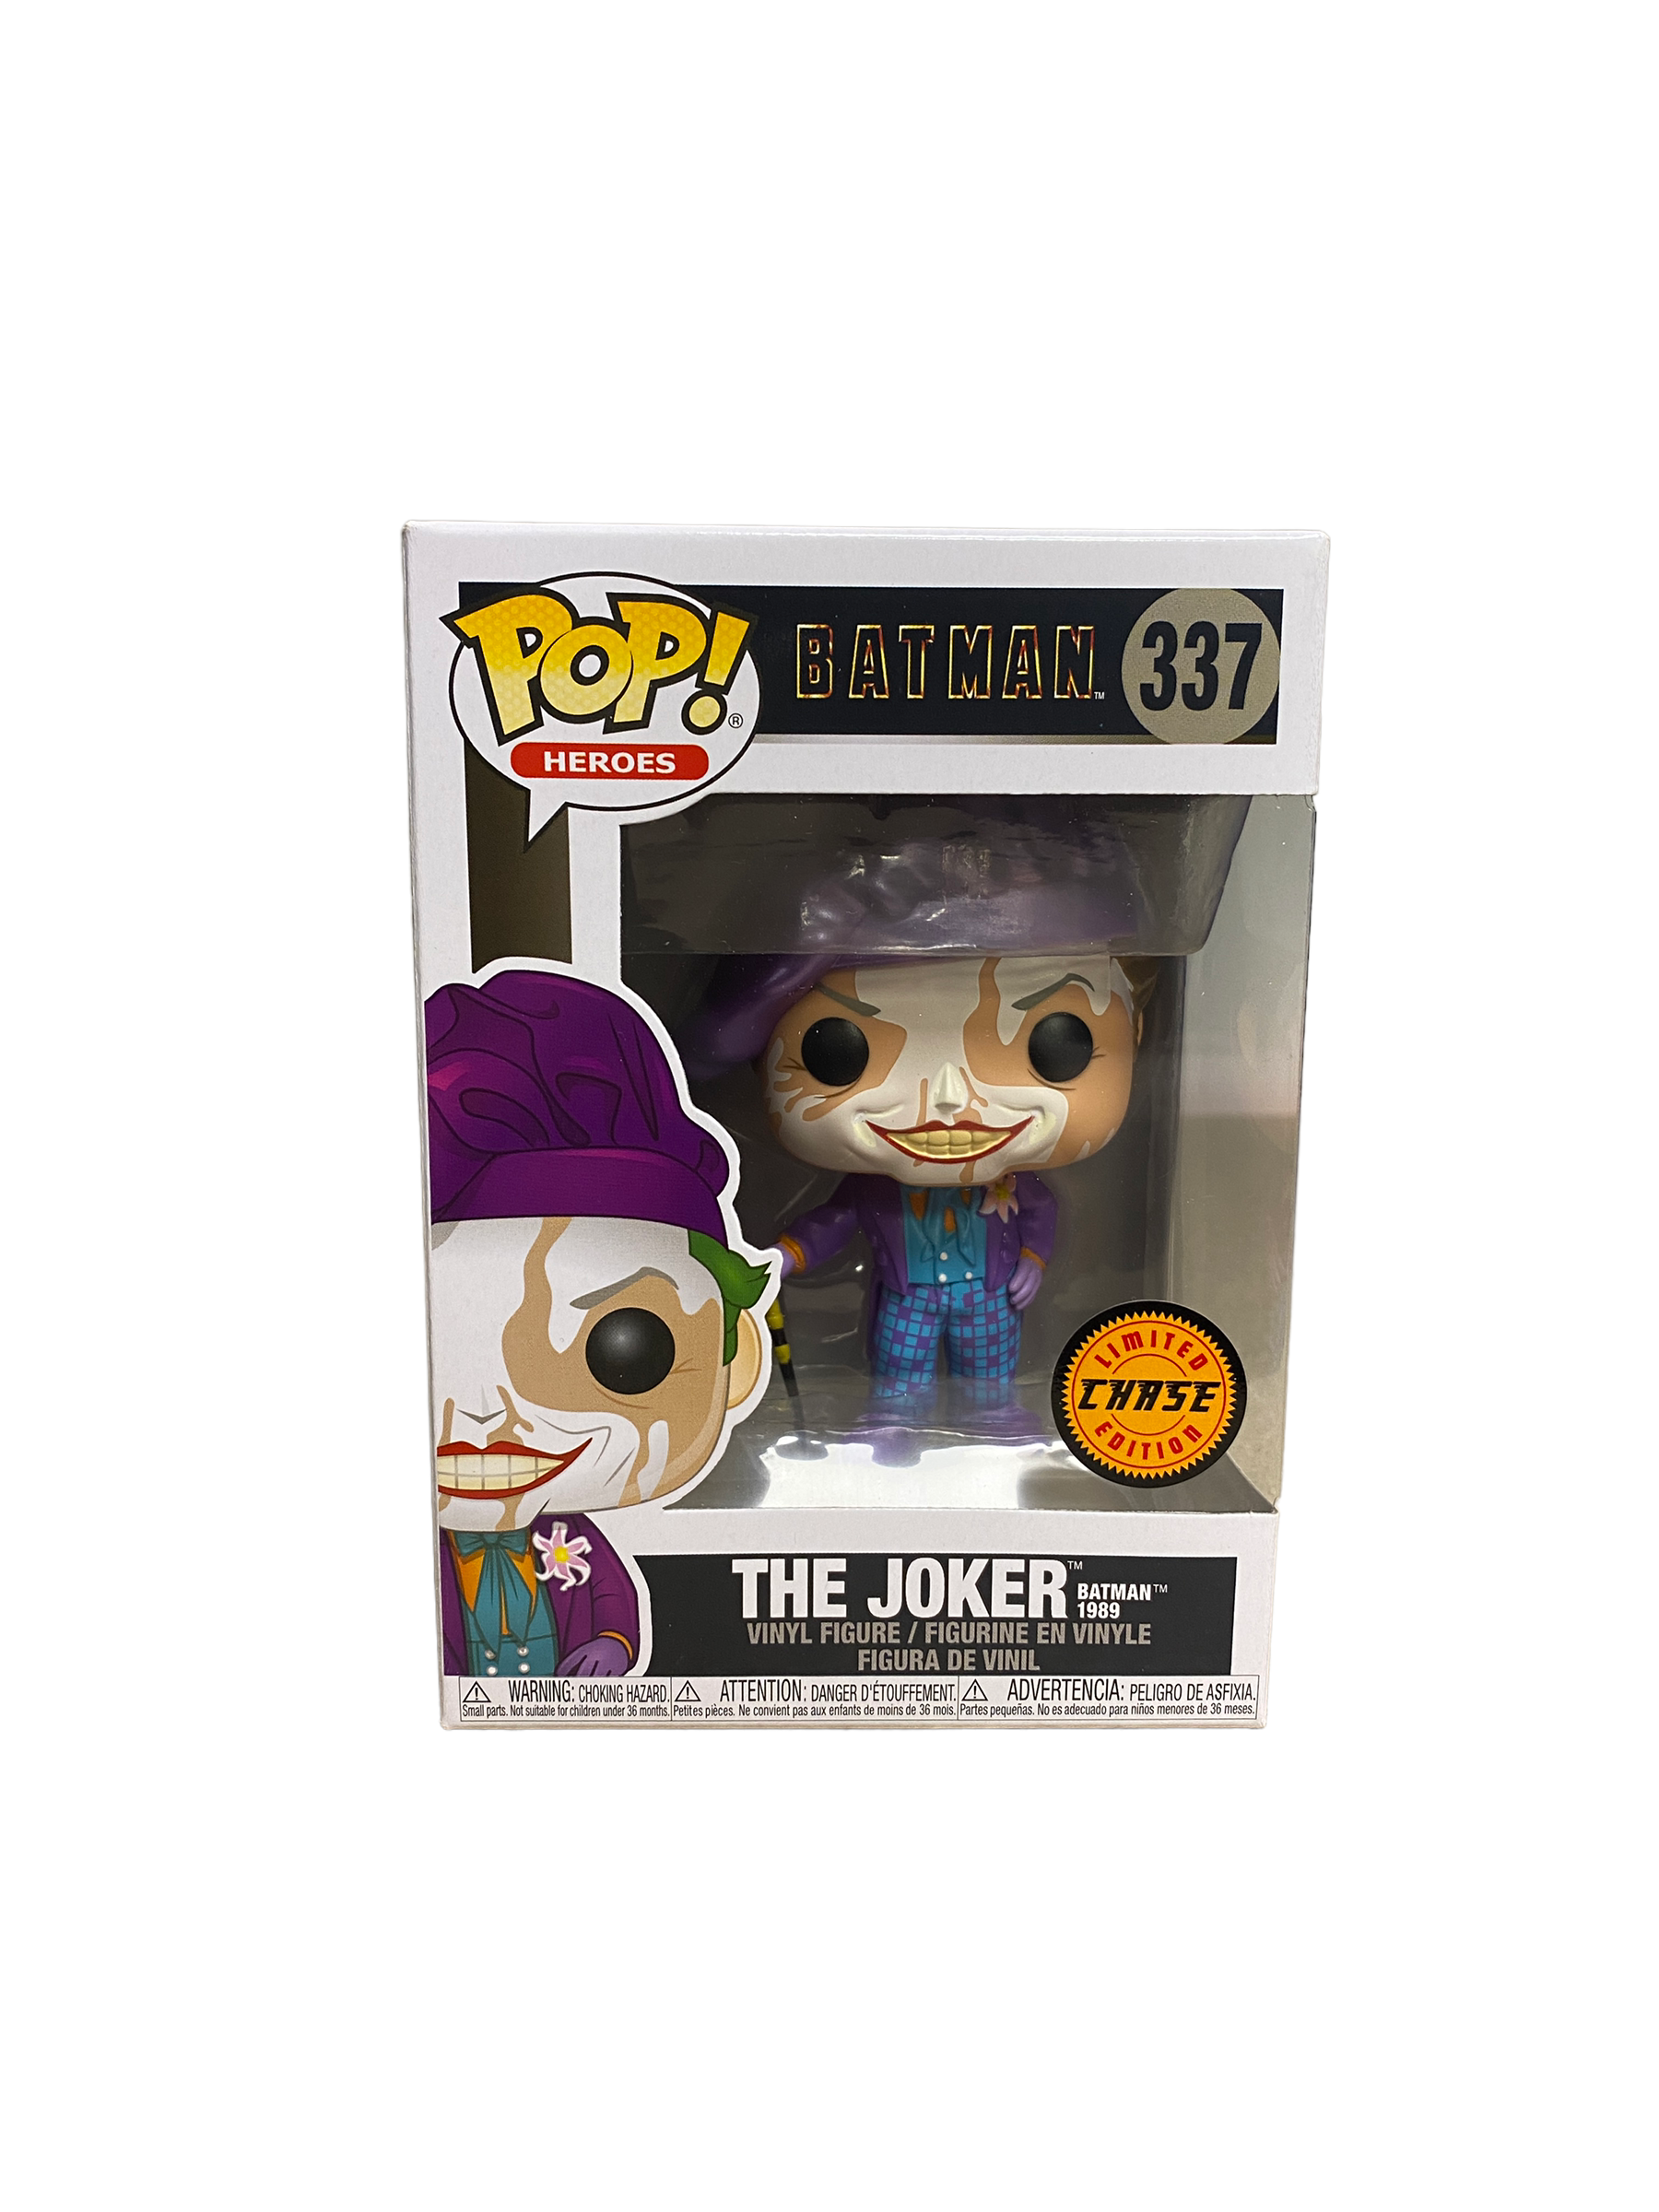 The Joker Batman 1989 #337 (w/ Beret Metallic Chase) Funko Pop! - Batman - 2021 Pop! - Condition 9.5/10